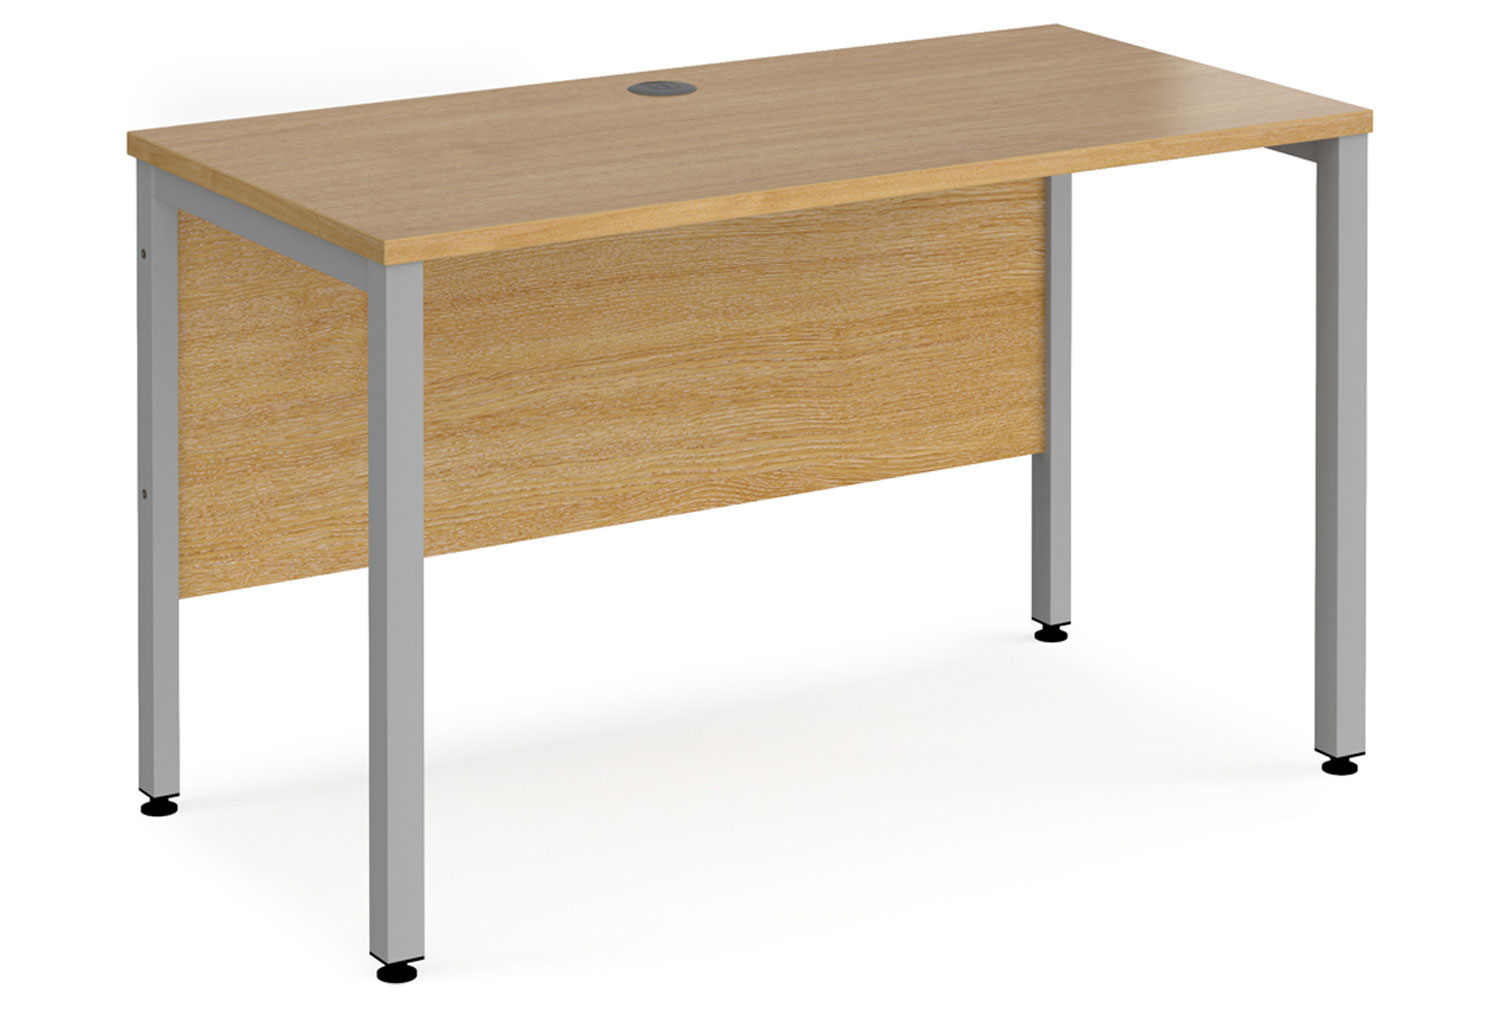 Value Line Deluxe Bench Narrow Rectangular Office Desks (Silver Legs), 120w60dx73h (cm), Oak